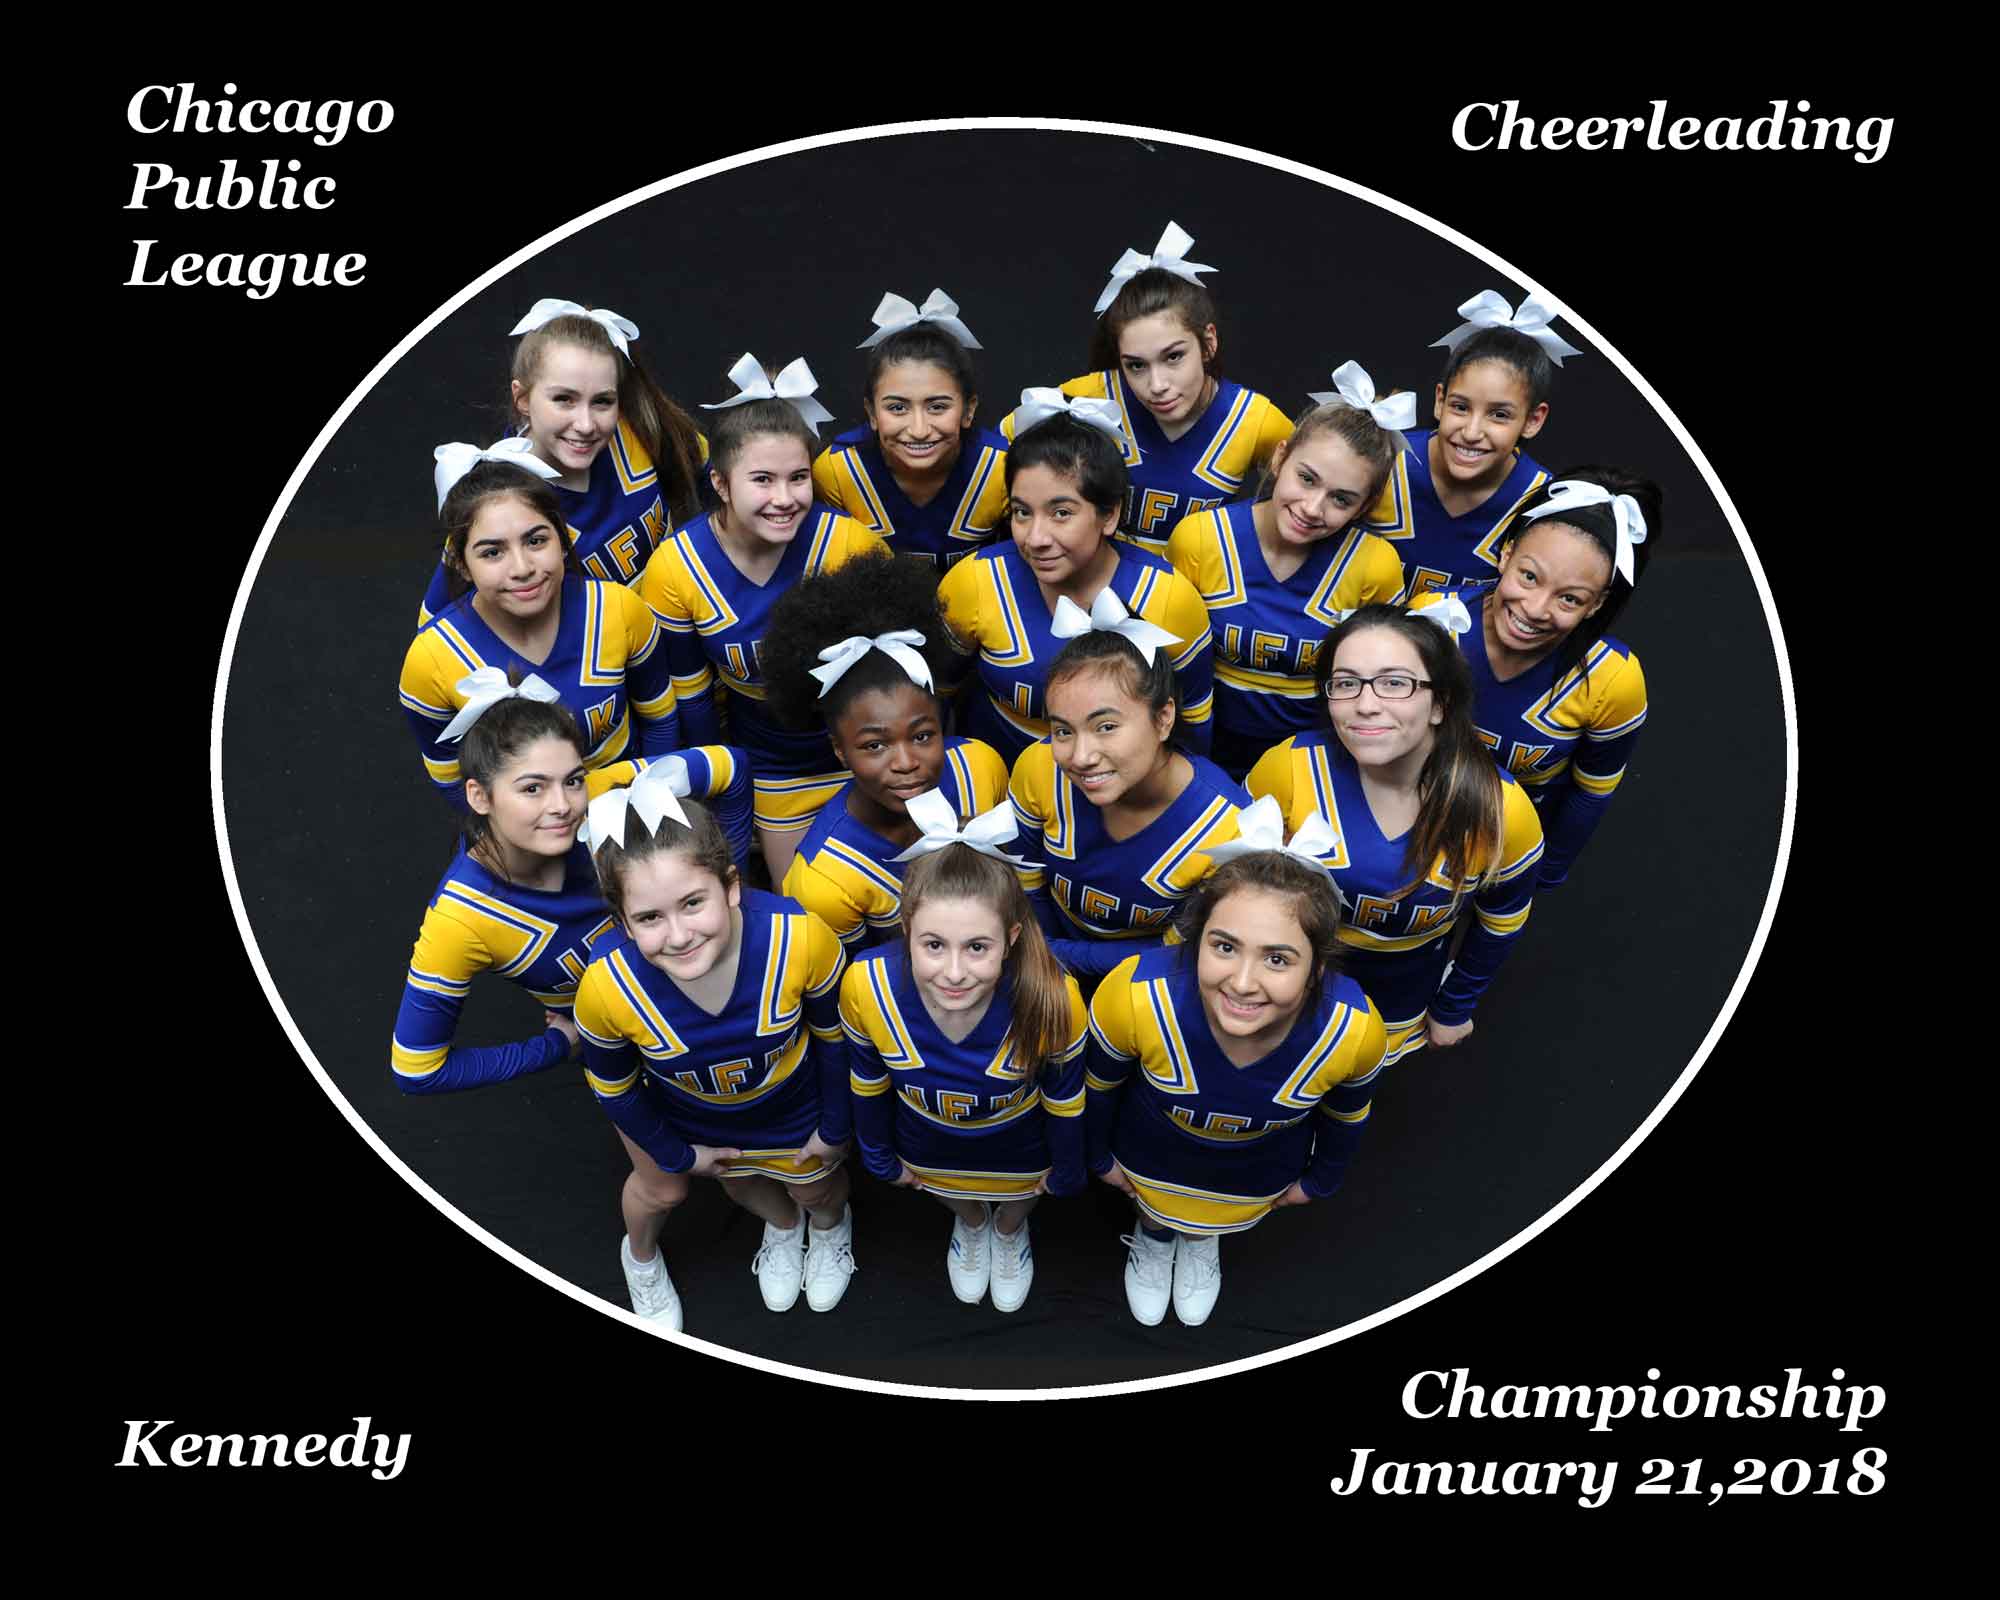 Chicago Public League Cheerleading Group Photo by Tom Killoran